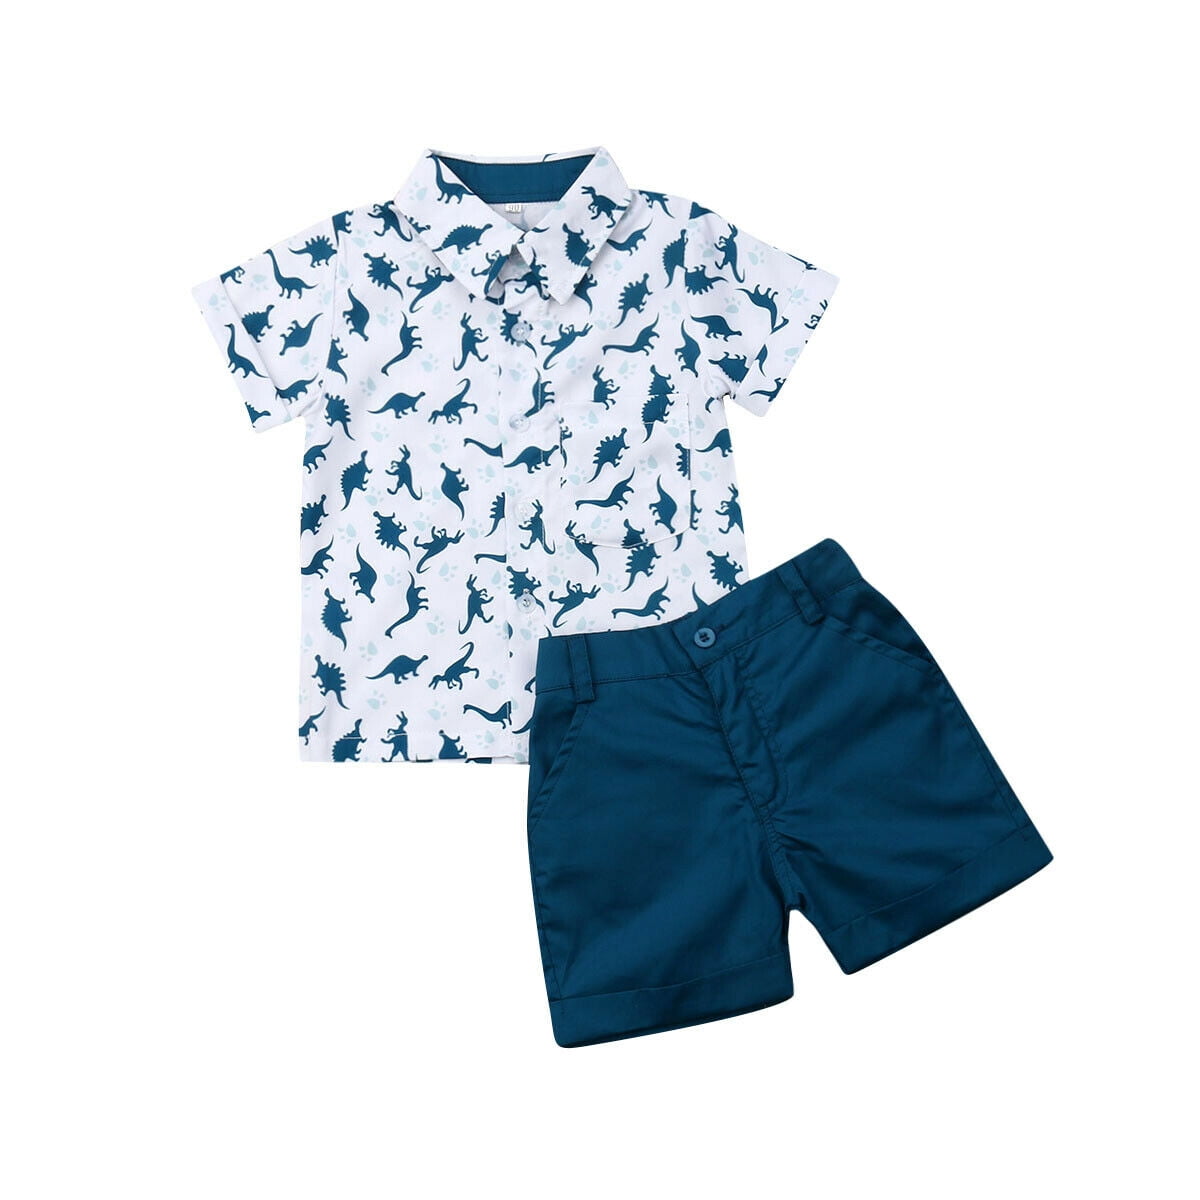 2021 New Toddler Baby Boys Kids Summer Dinosaur Clothes T-Shirt Tops +  Shorts Outfits Set